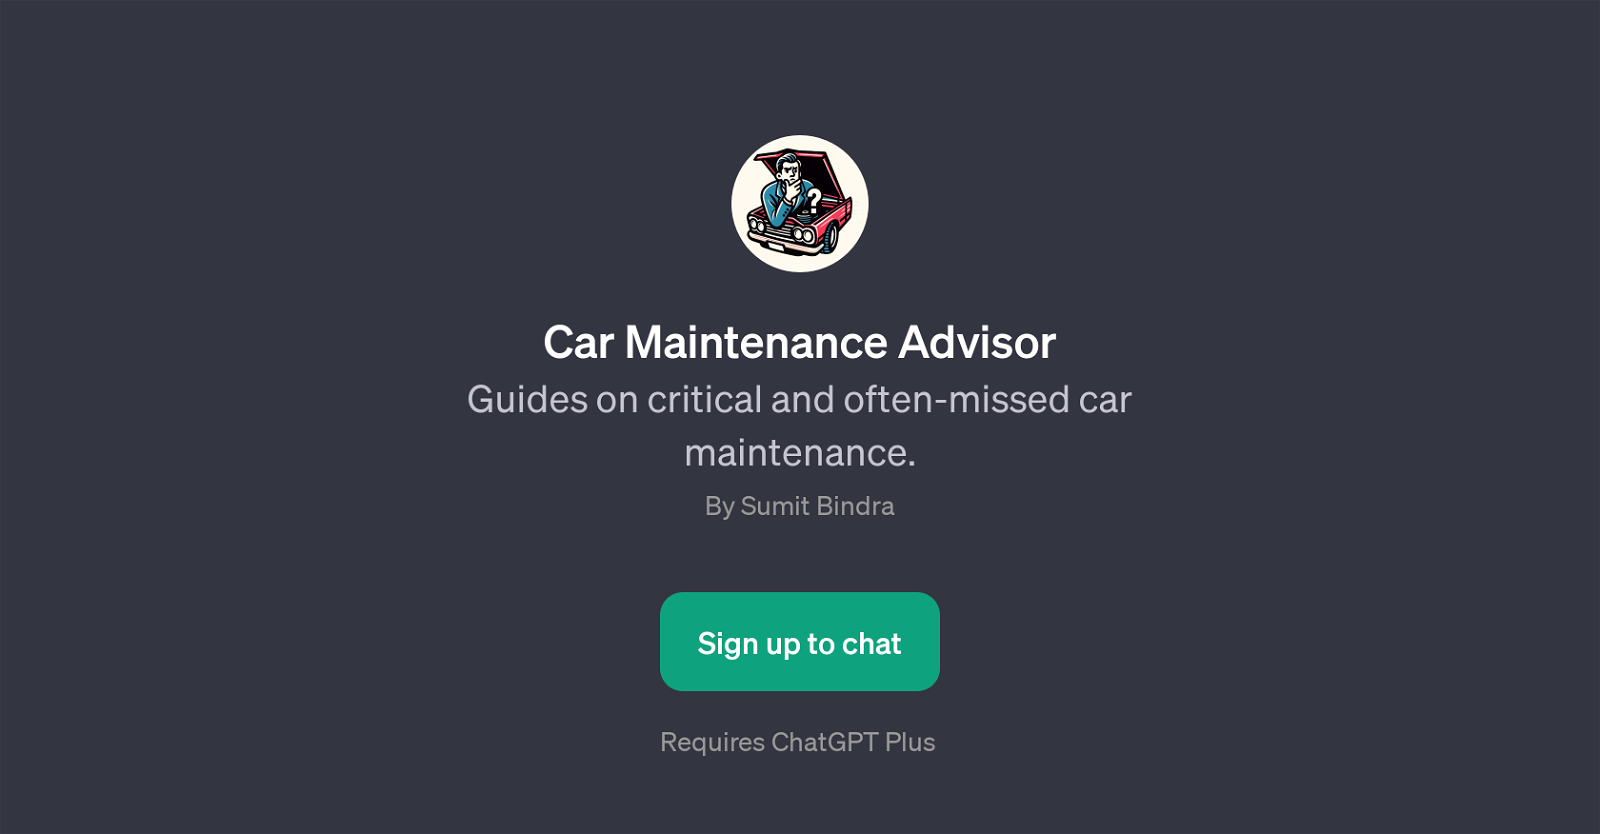 Car Maintenance Advisor website